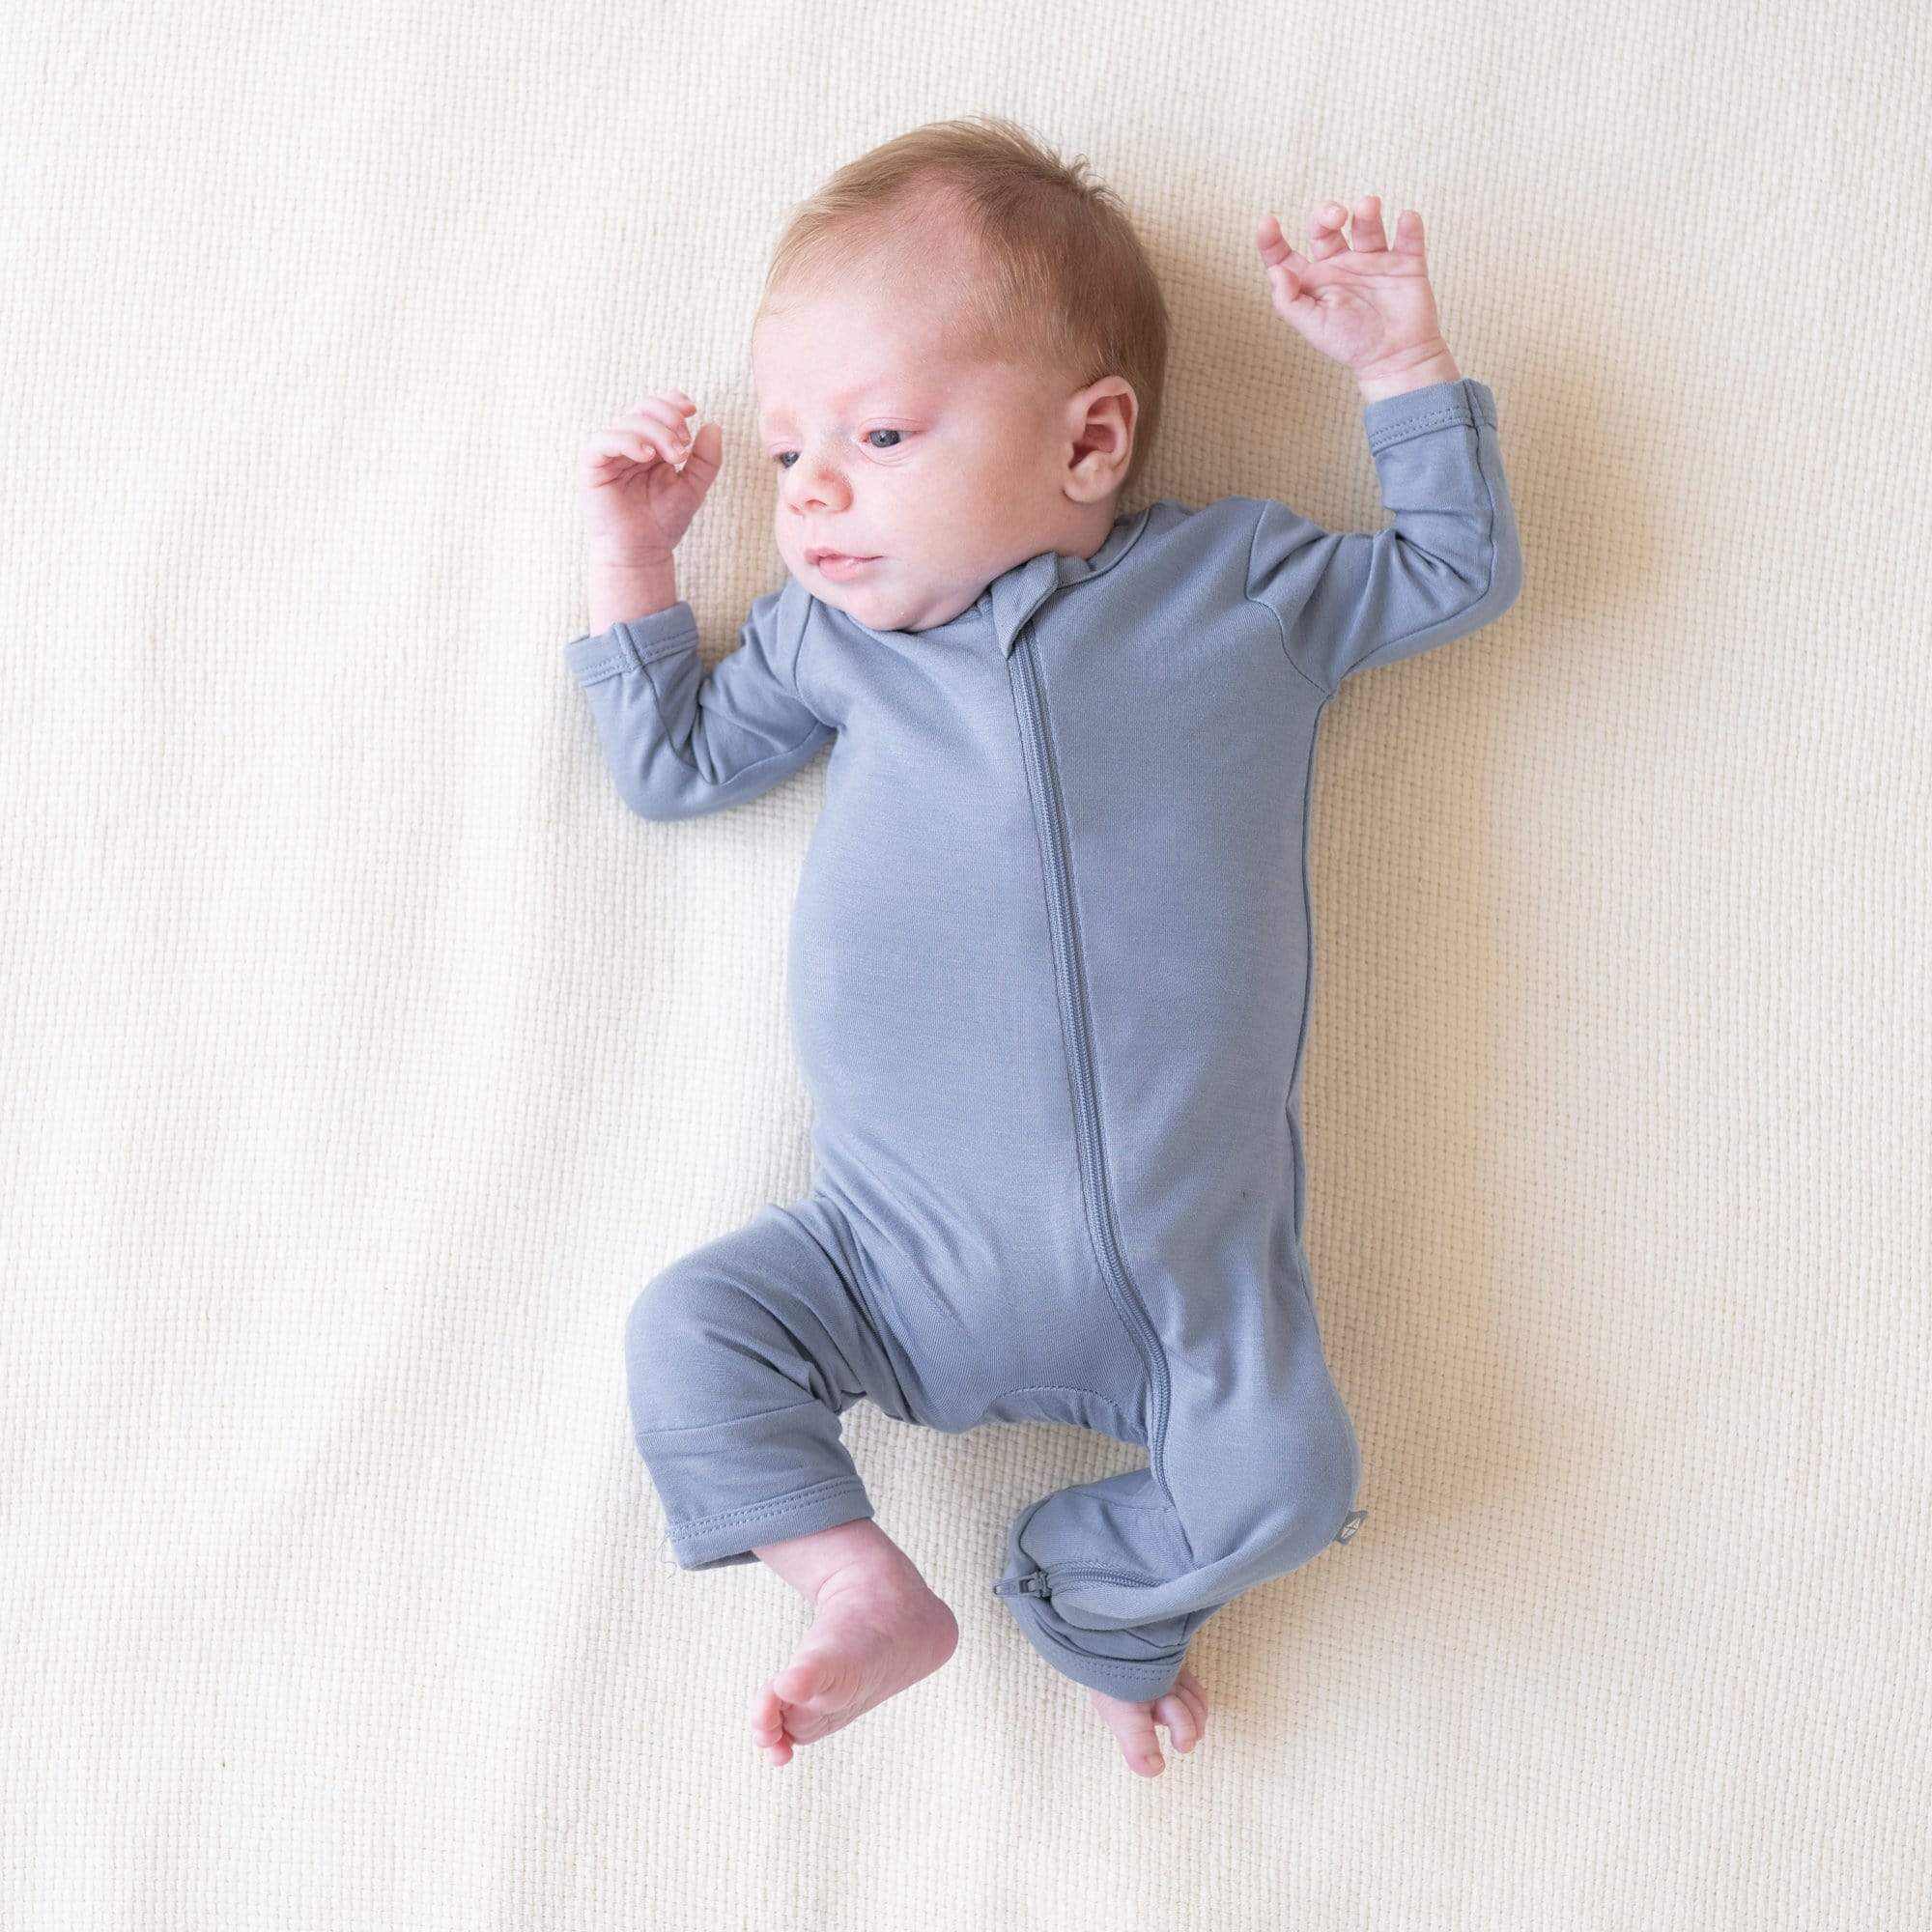 Infant wearing Kyte Baby Zippered Romper in Slate